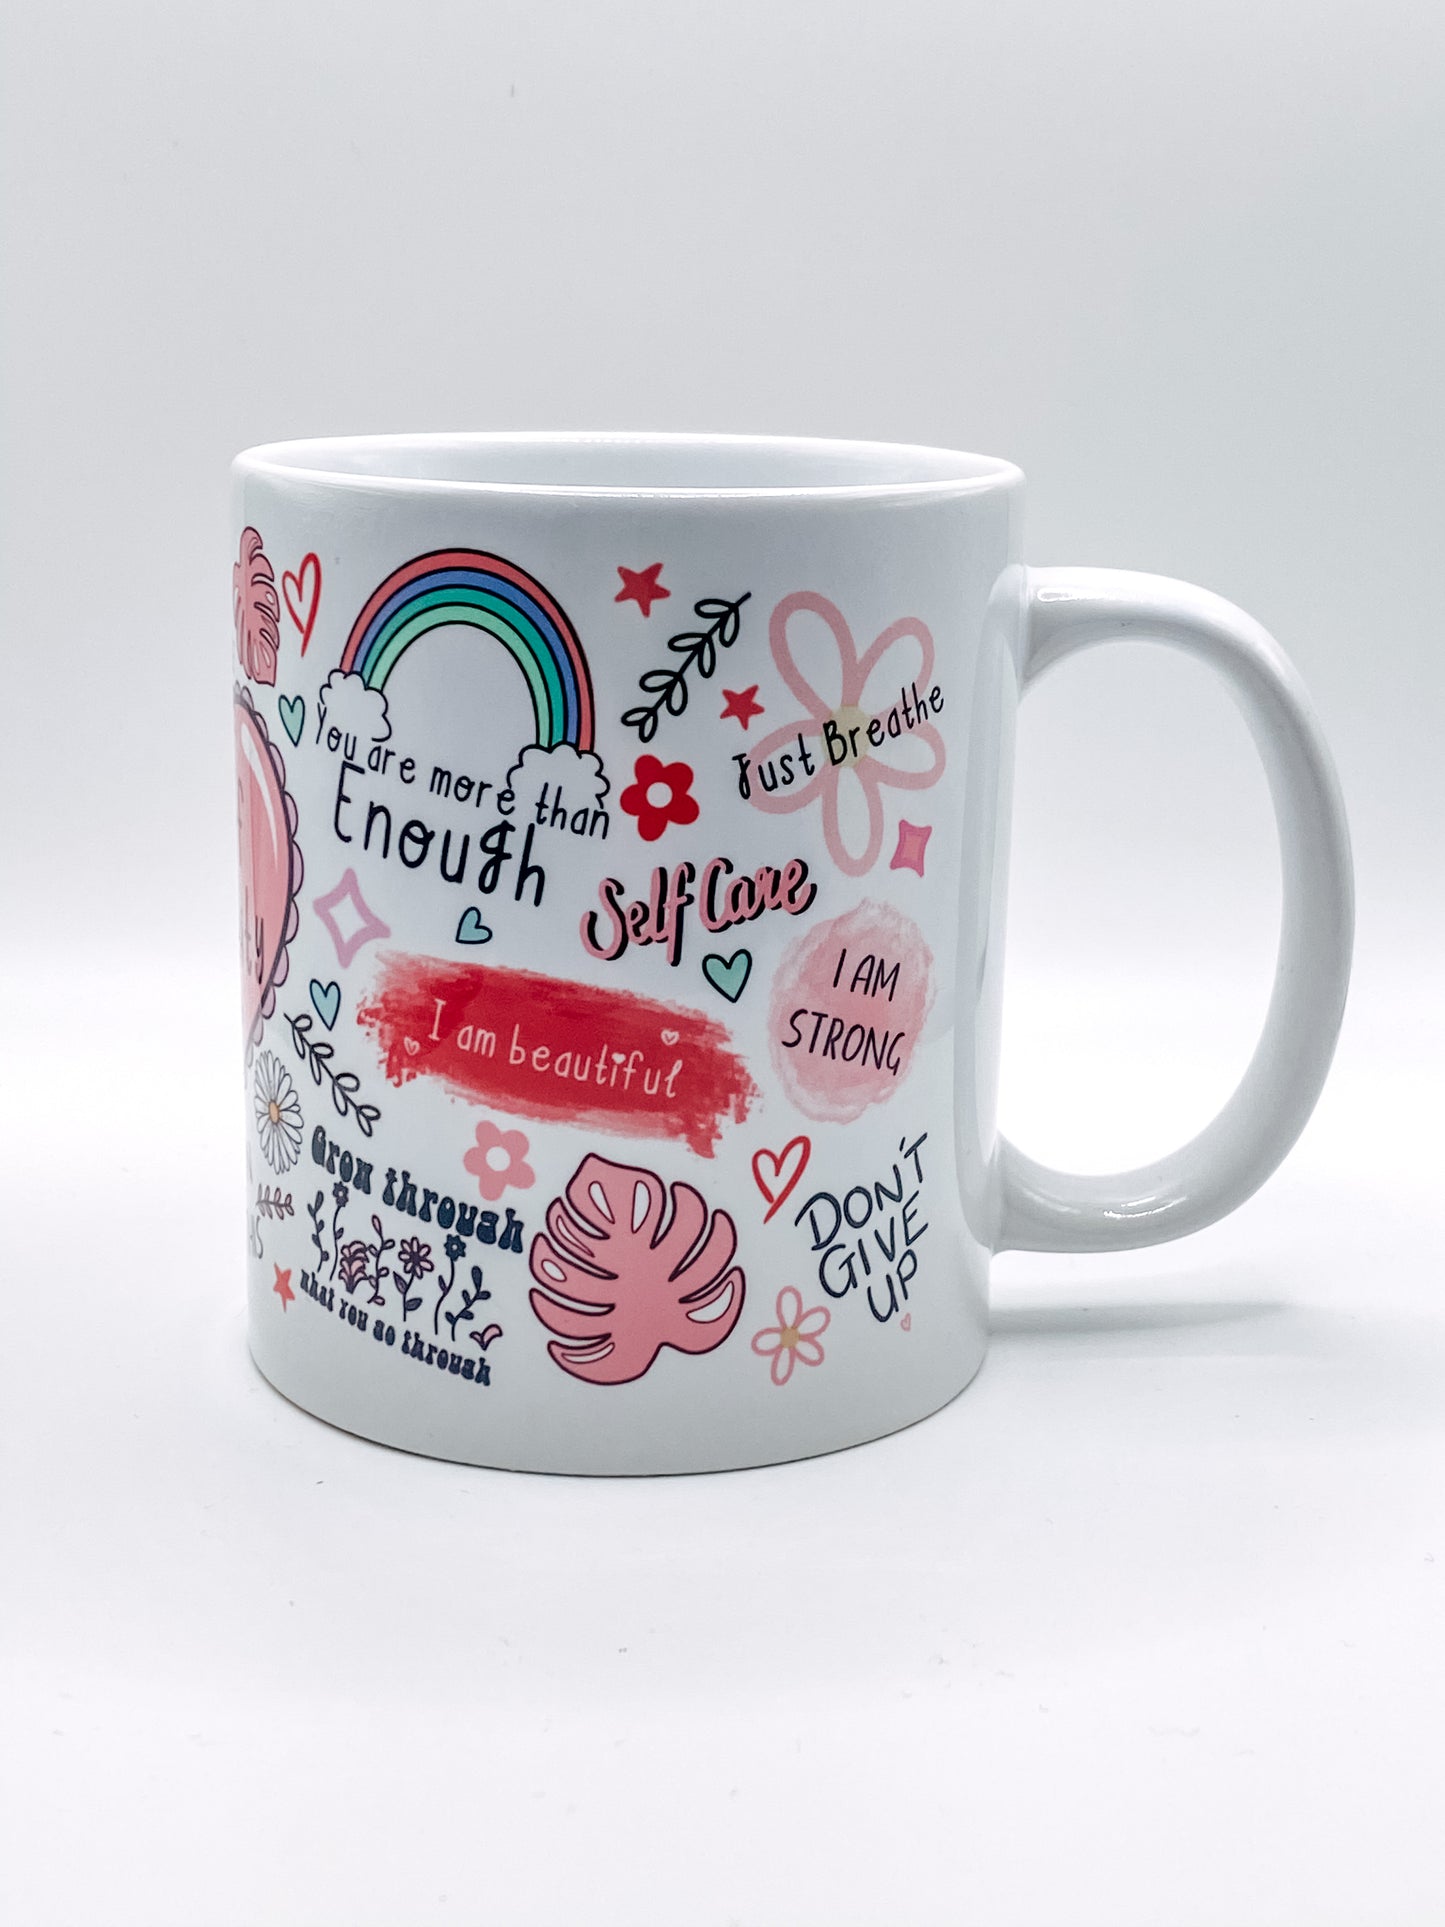 Cup of Positivity Mug